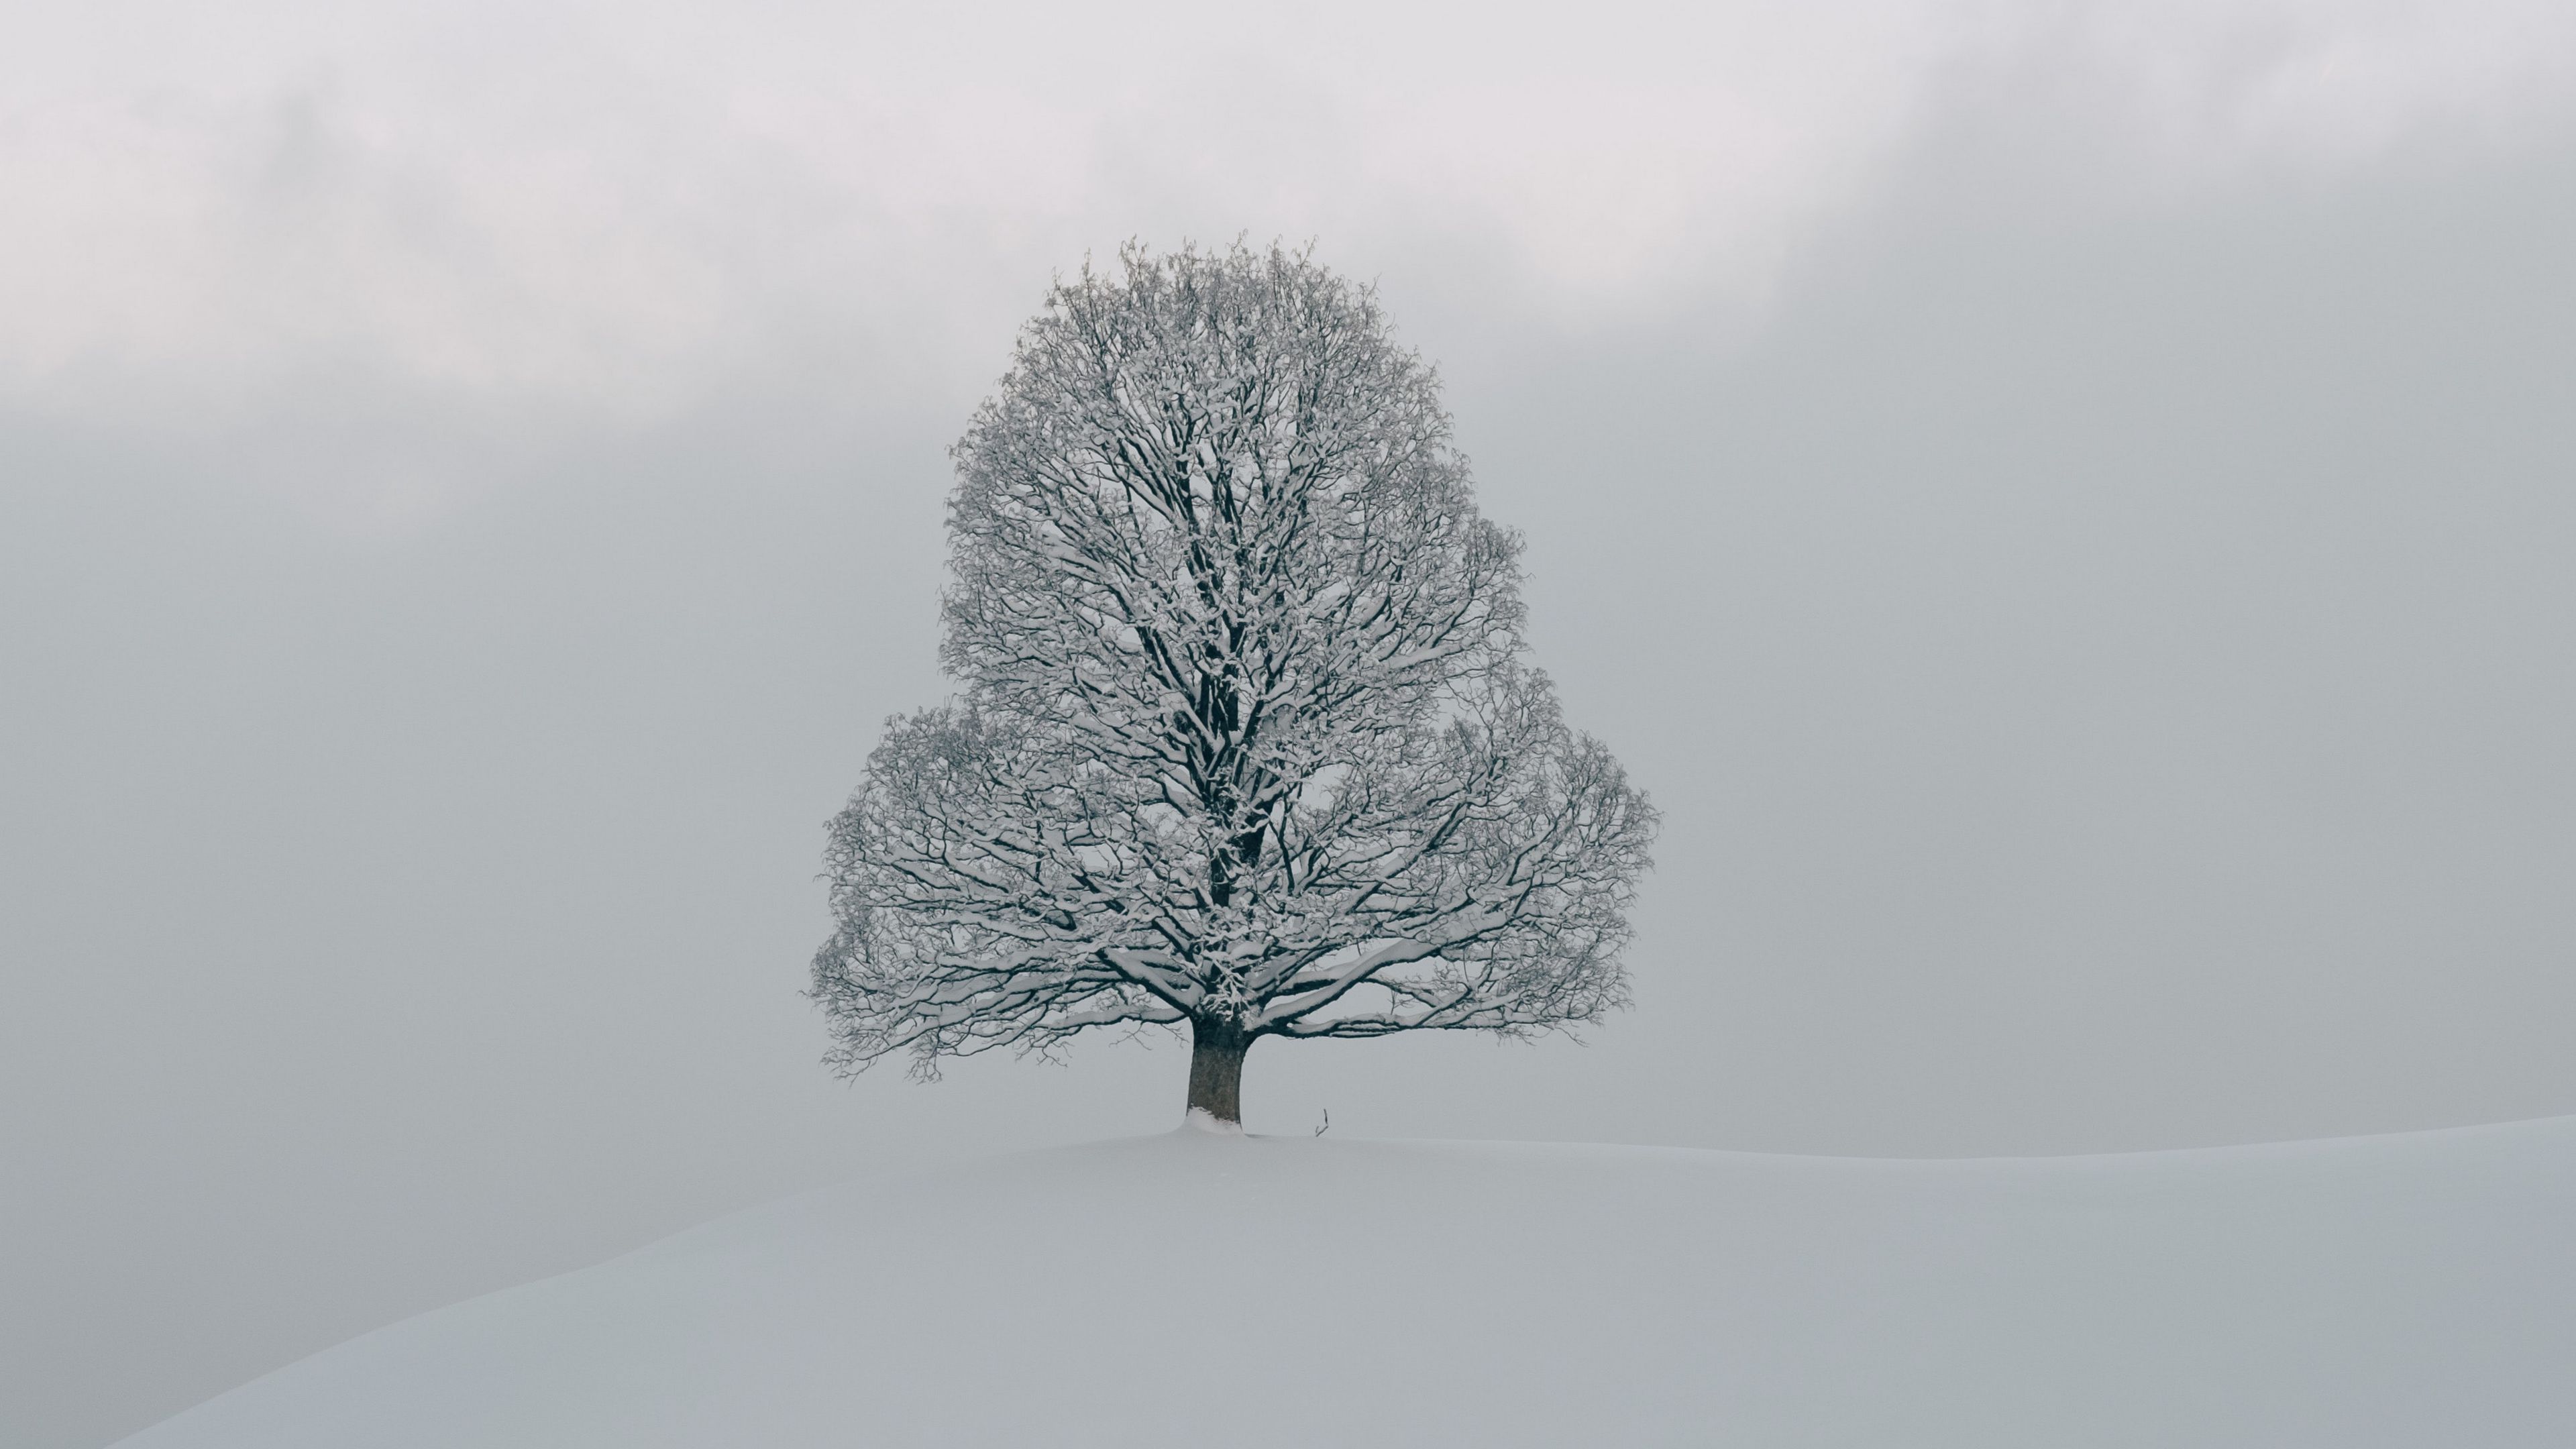 Download wallpaper 3840x2160 tree, snow, winter, nature, white 4k uhd